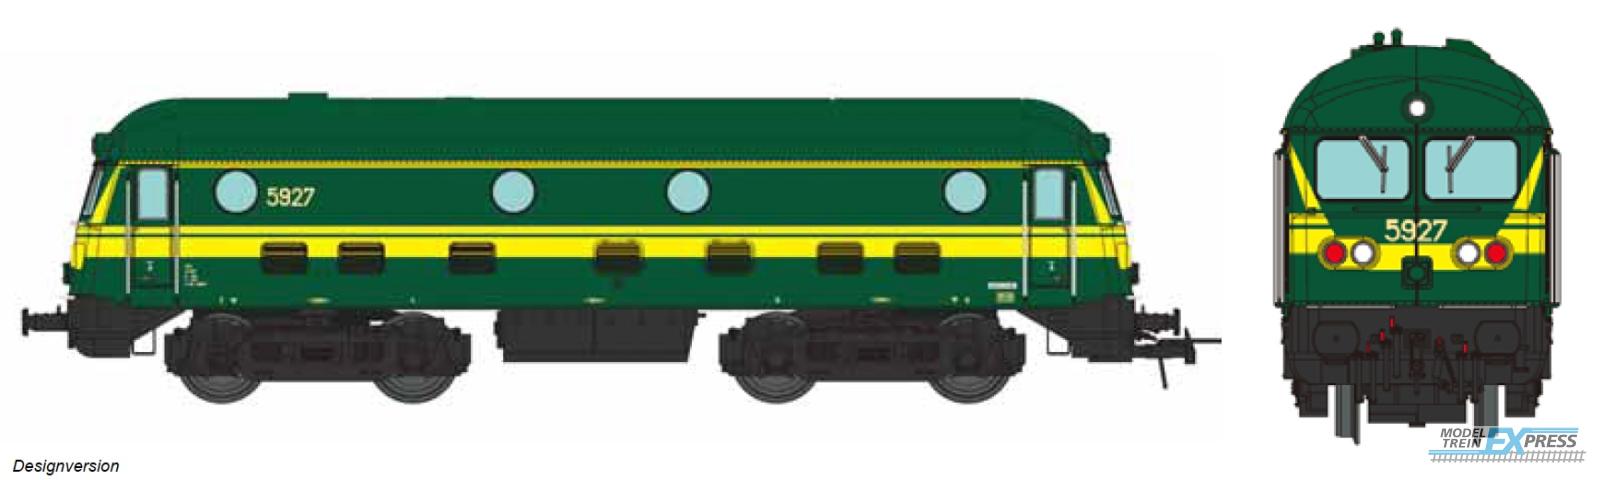 B-Models 9310.03 Diesel 5927, DC. 2-Rail Digital Sound